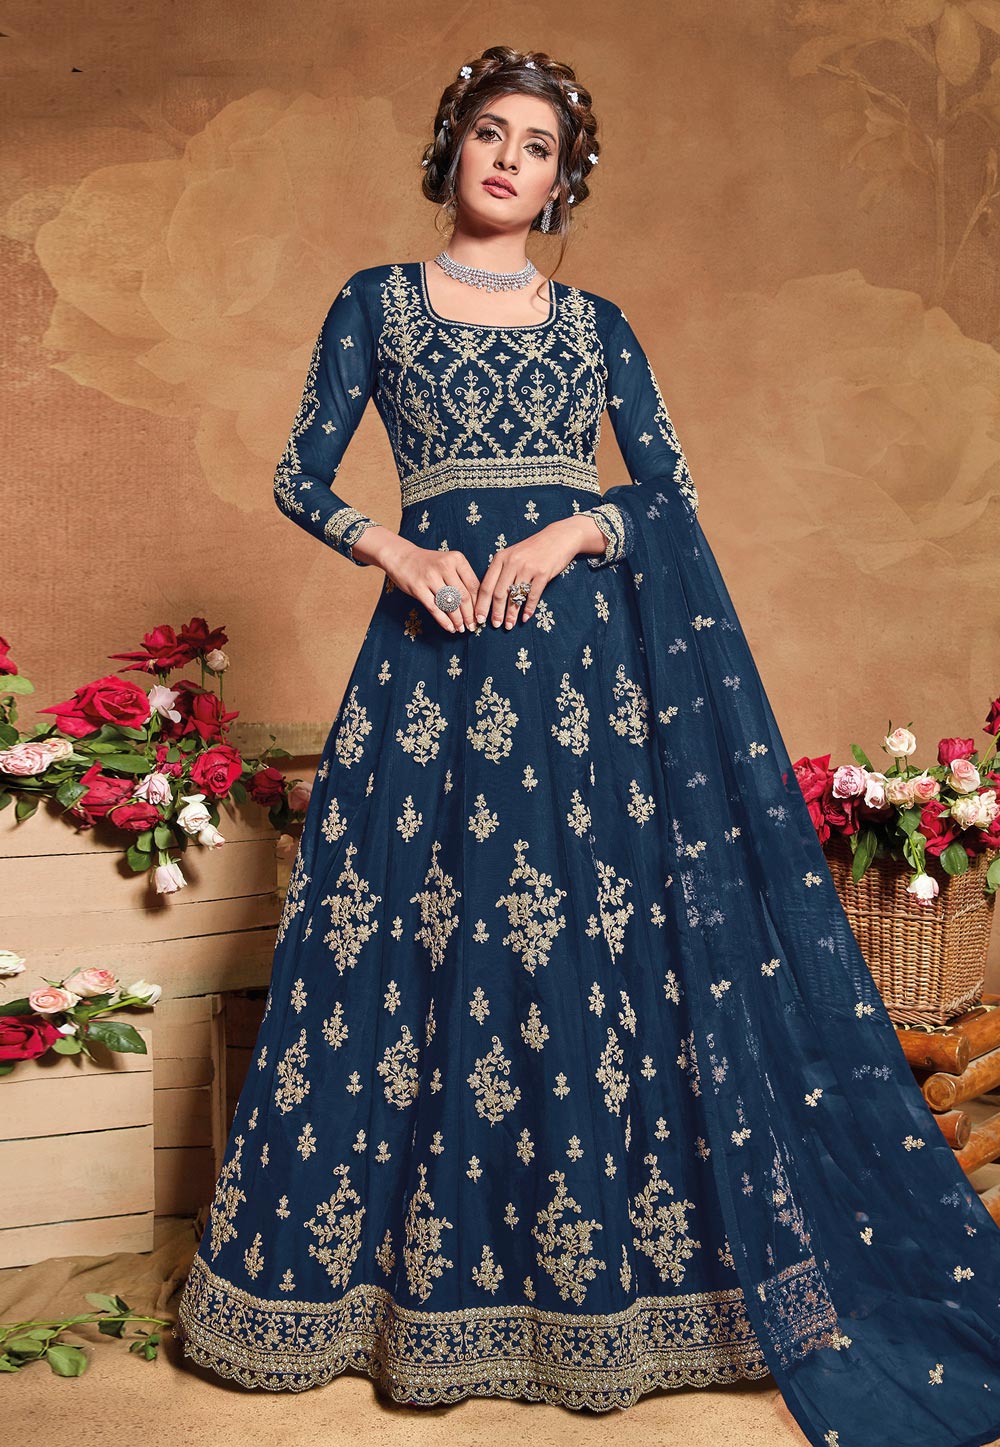 Blue Anarkali Salwar Kameez Indian Wedding Party Wear Embroidery long dress suit 